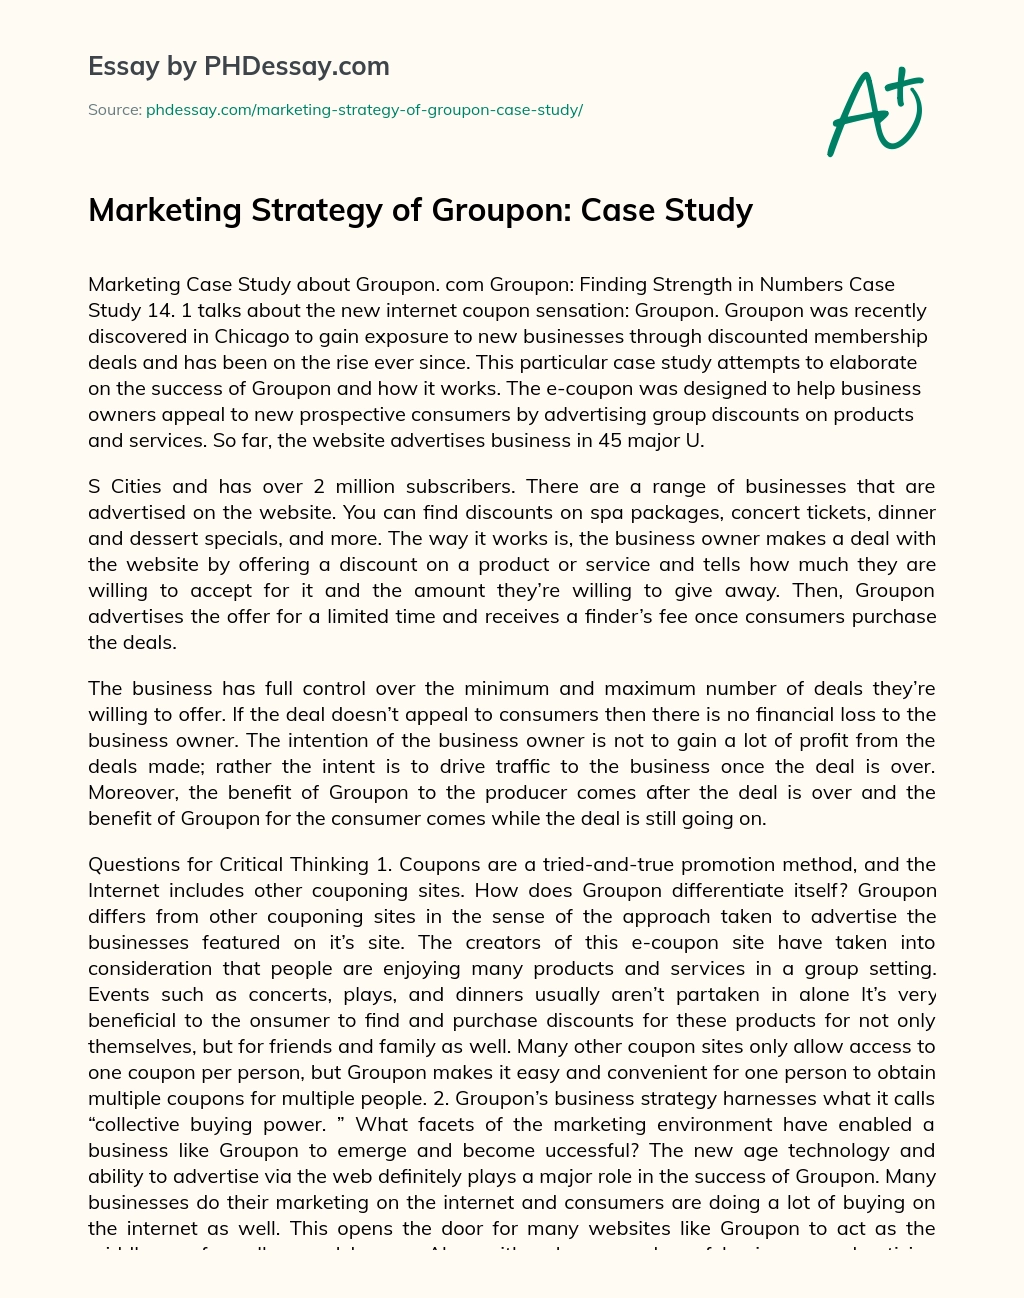 Marketing Strategy of Groupon: Case Study essay